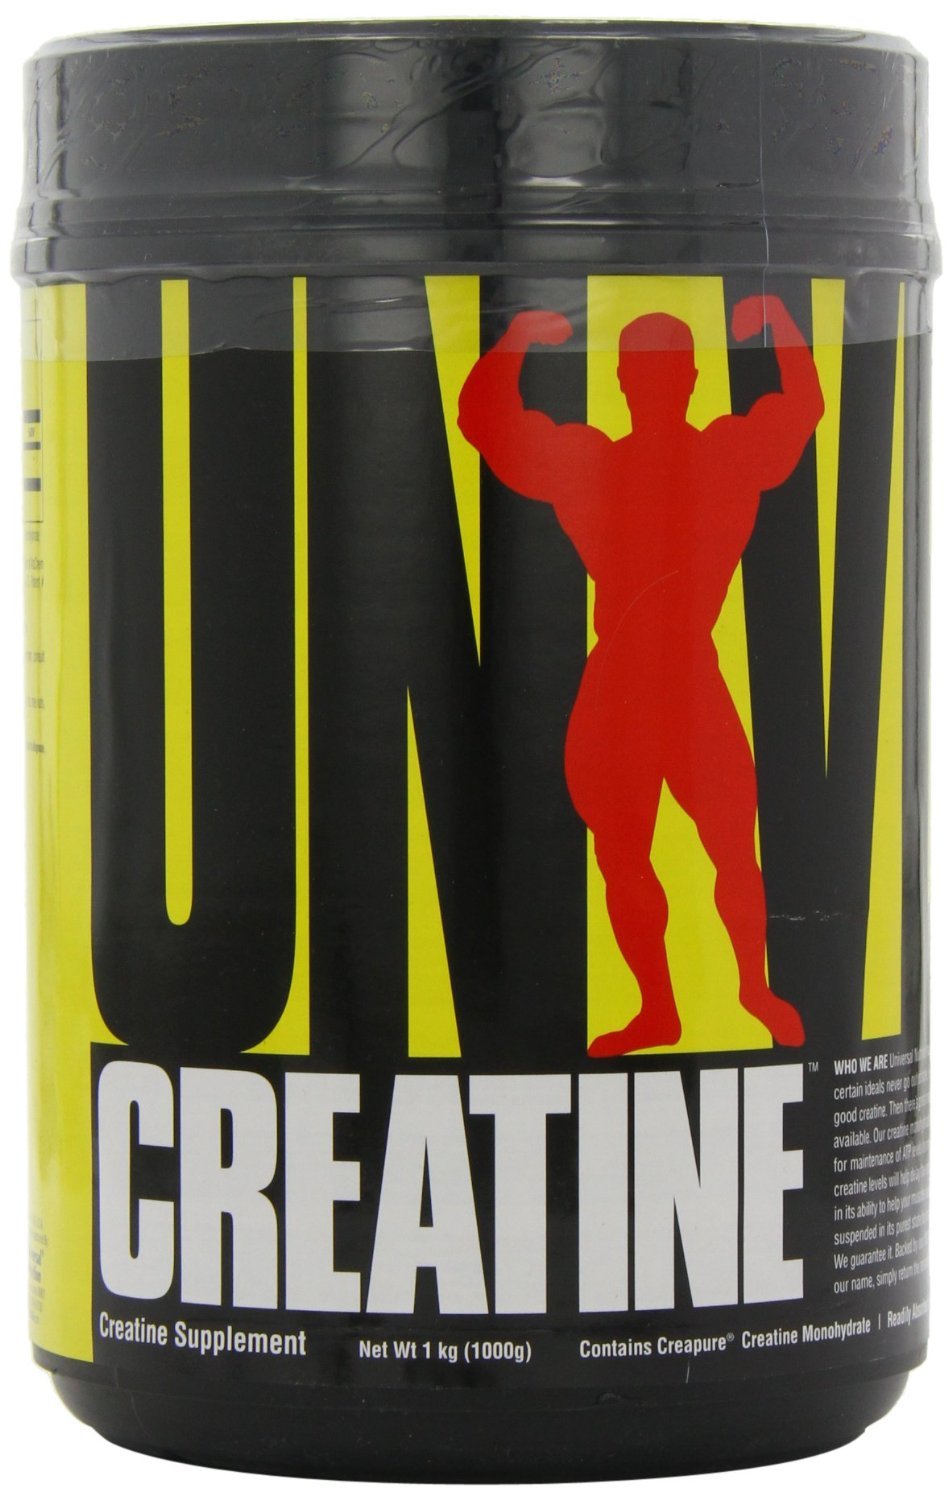 Creatine Monohydrate, 1000 g, Universal Nutrition. Monohidrato de creatina. Mass Gain Energy & Endurance Strength enhancement 